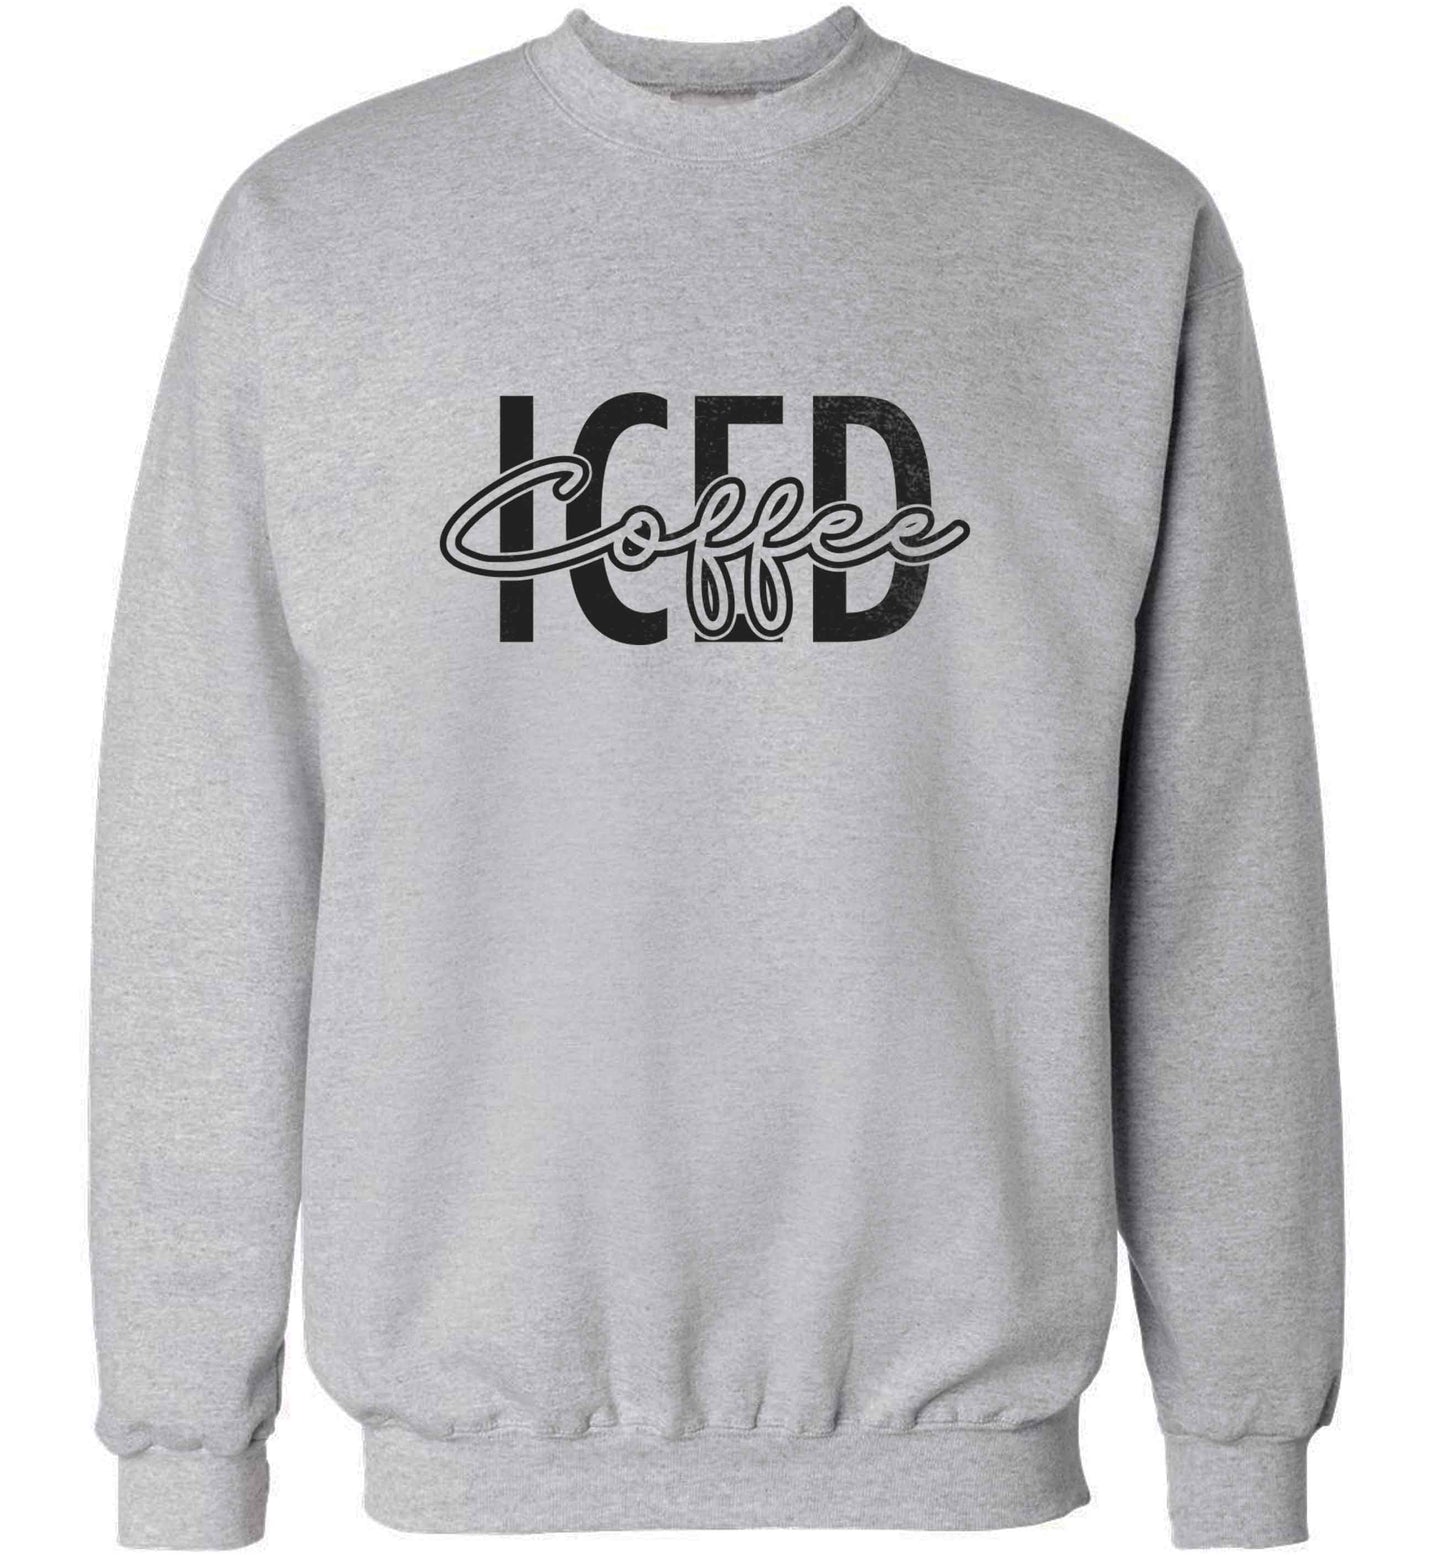 Iced Coffee adult's unisex grey sweater 2XL